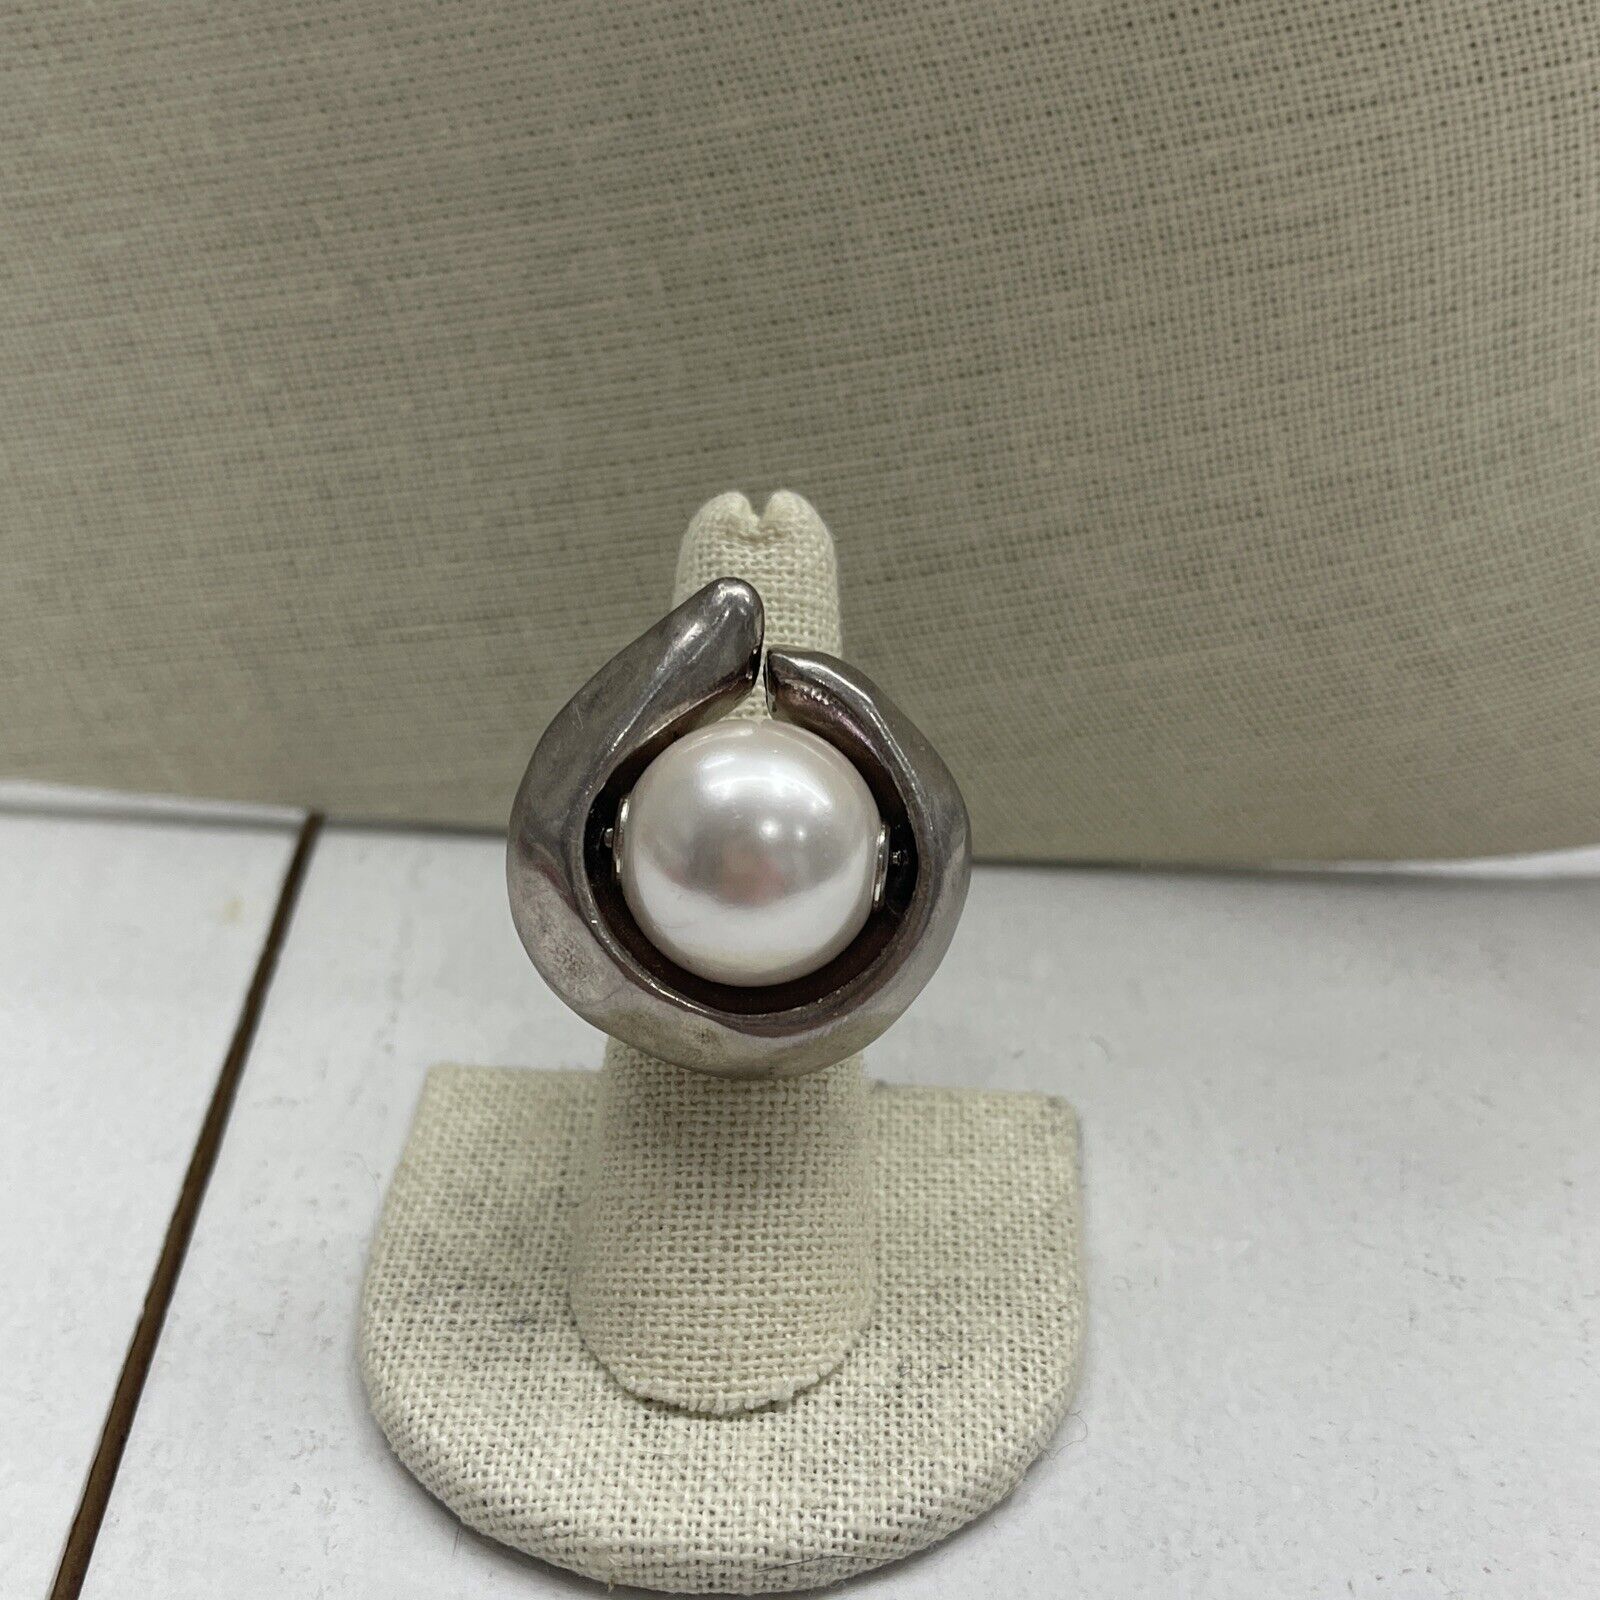 UNO DE 50 Half Moon Pearl Ring Women’s Size 6.5-7